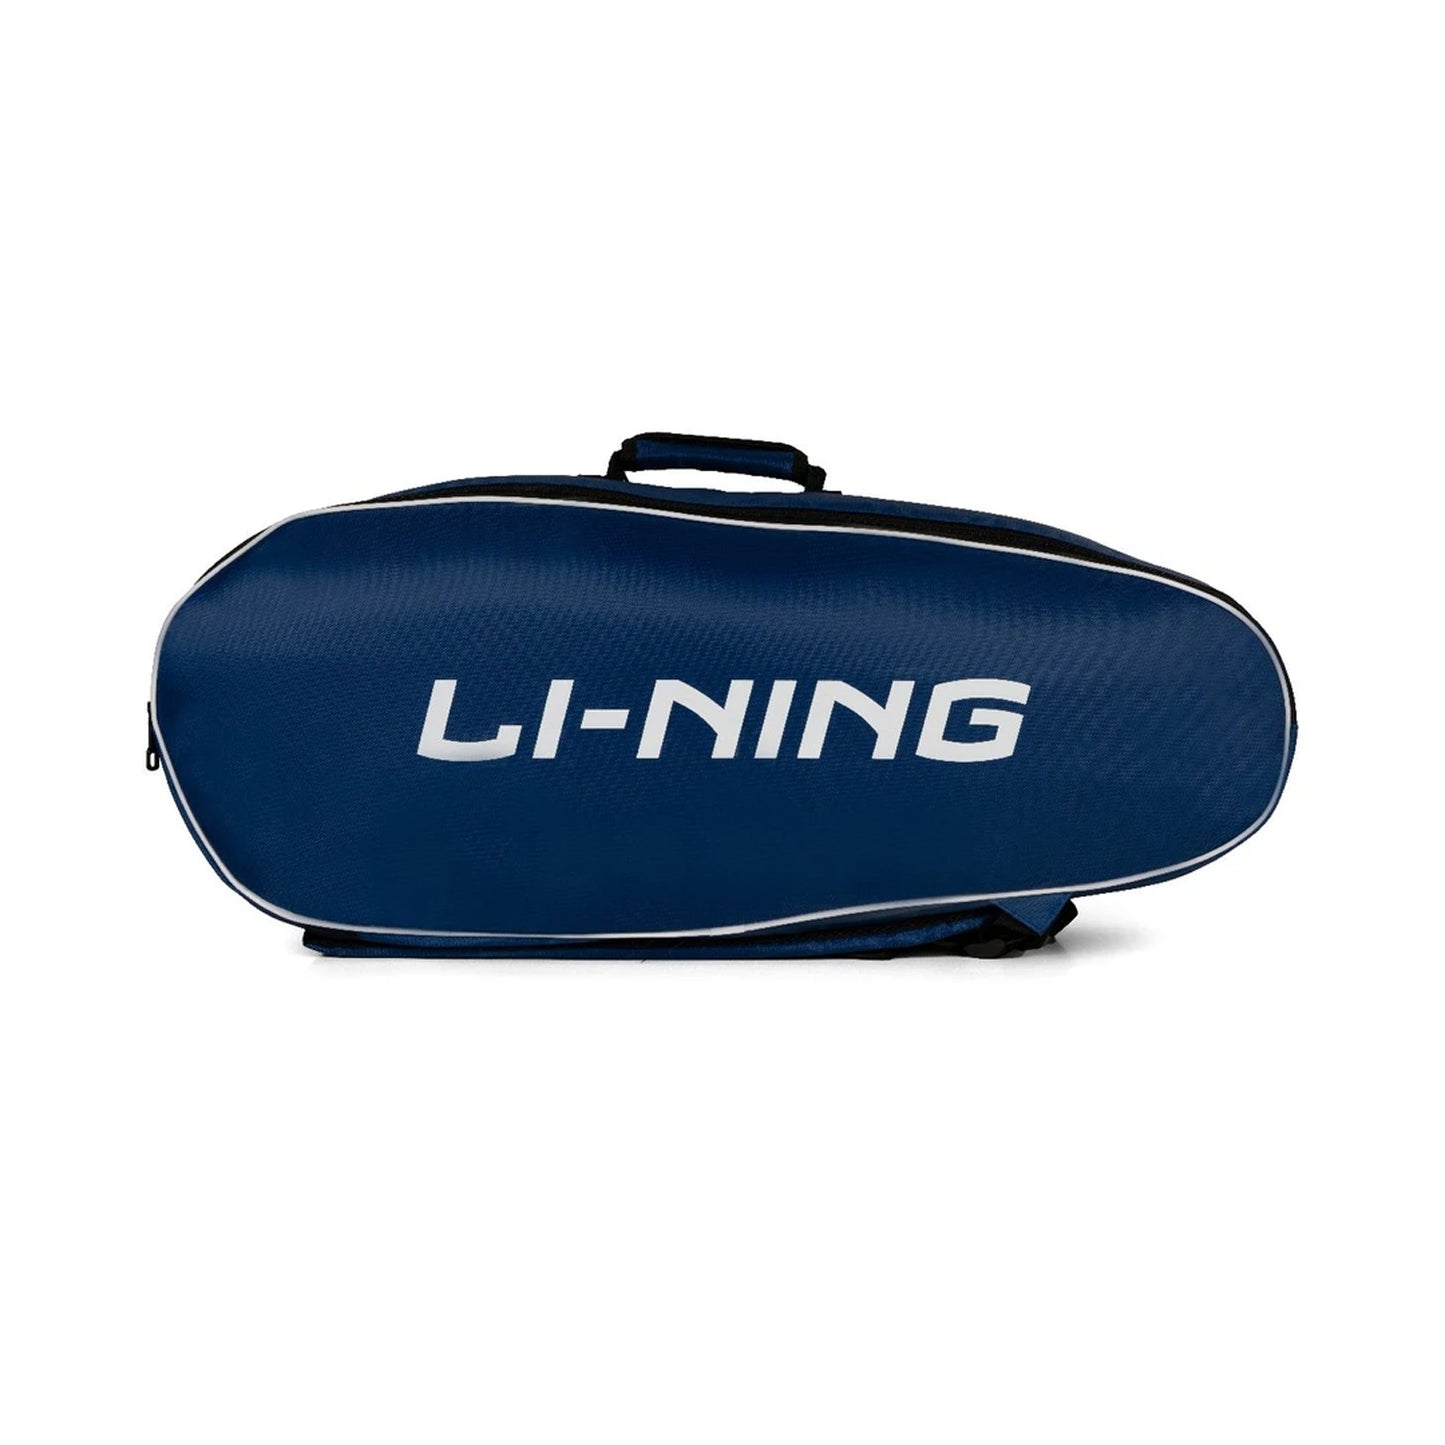 Li-Ning Polygon Badminton Kit Bag - Best Price online Prokicksports.com